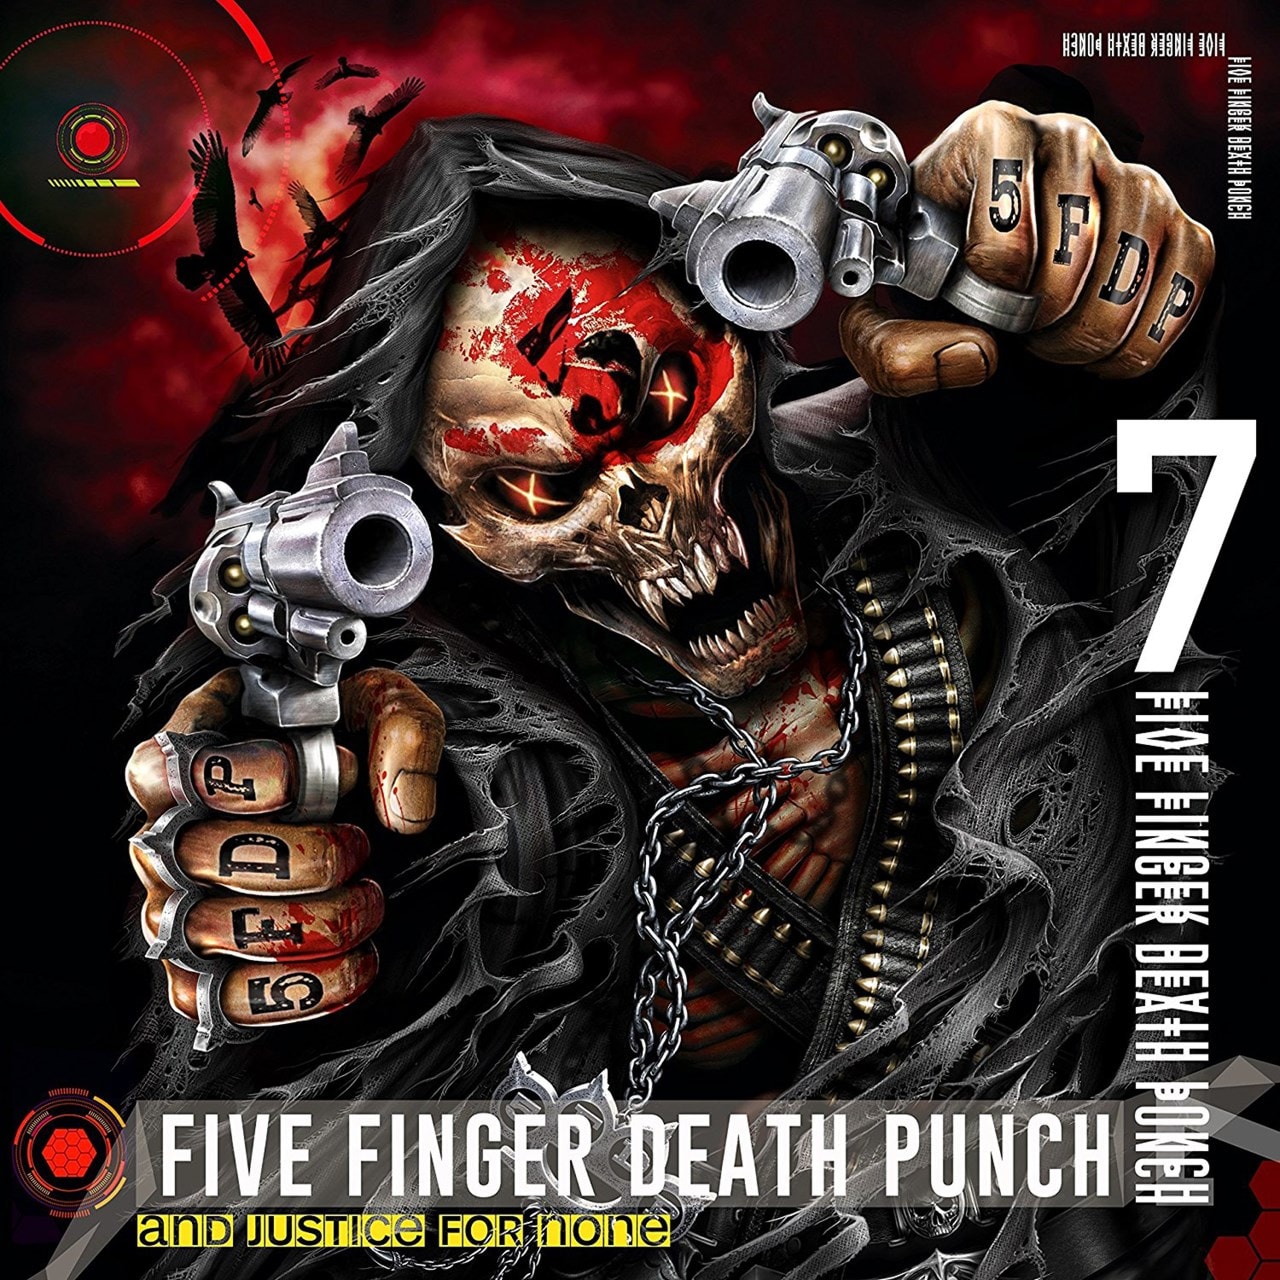 five finger death punch store